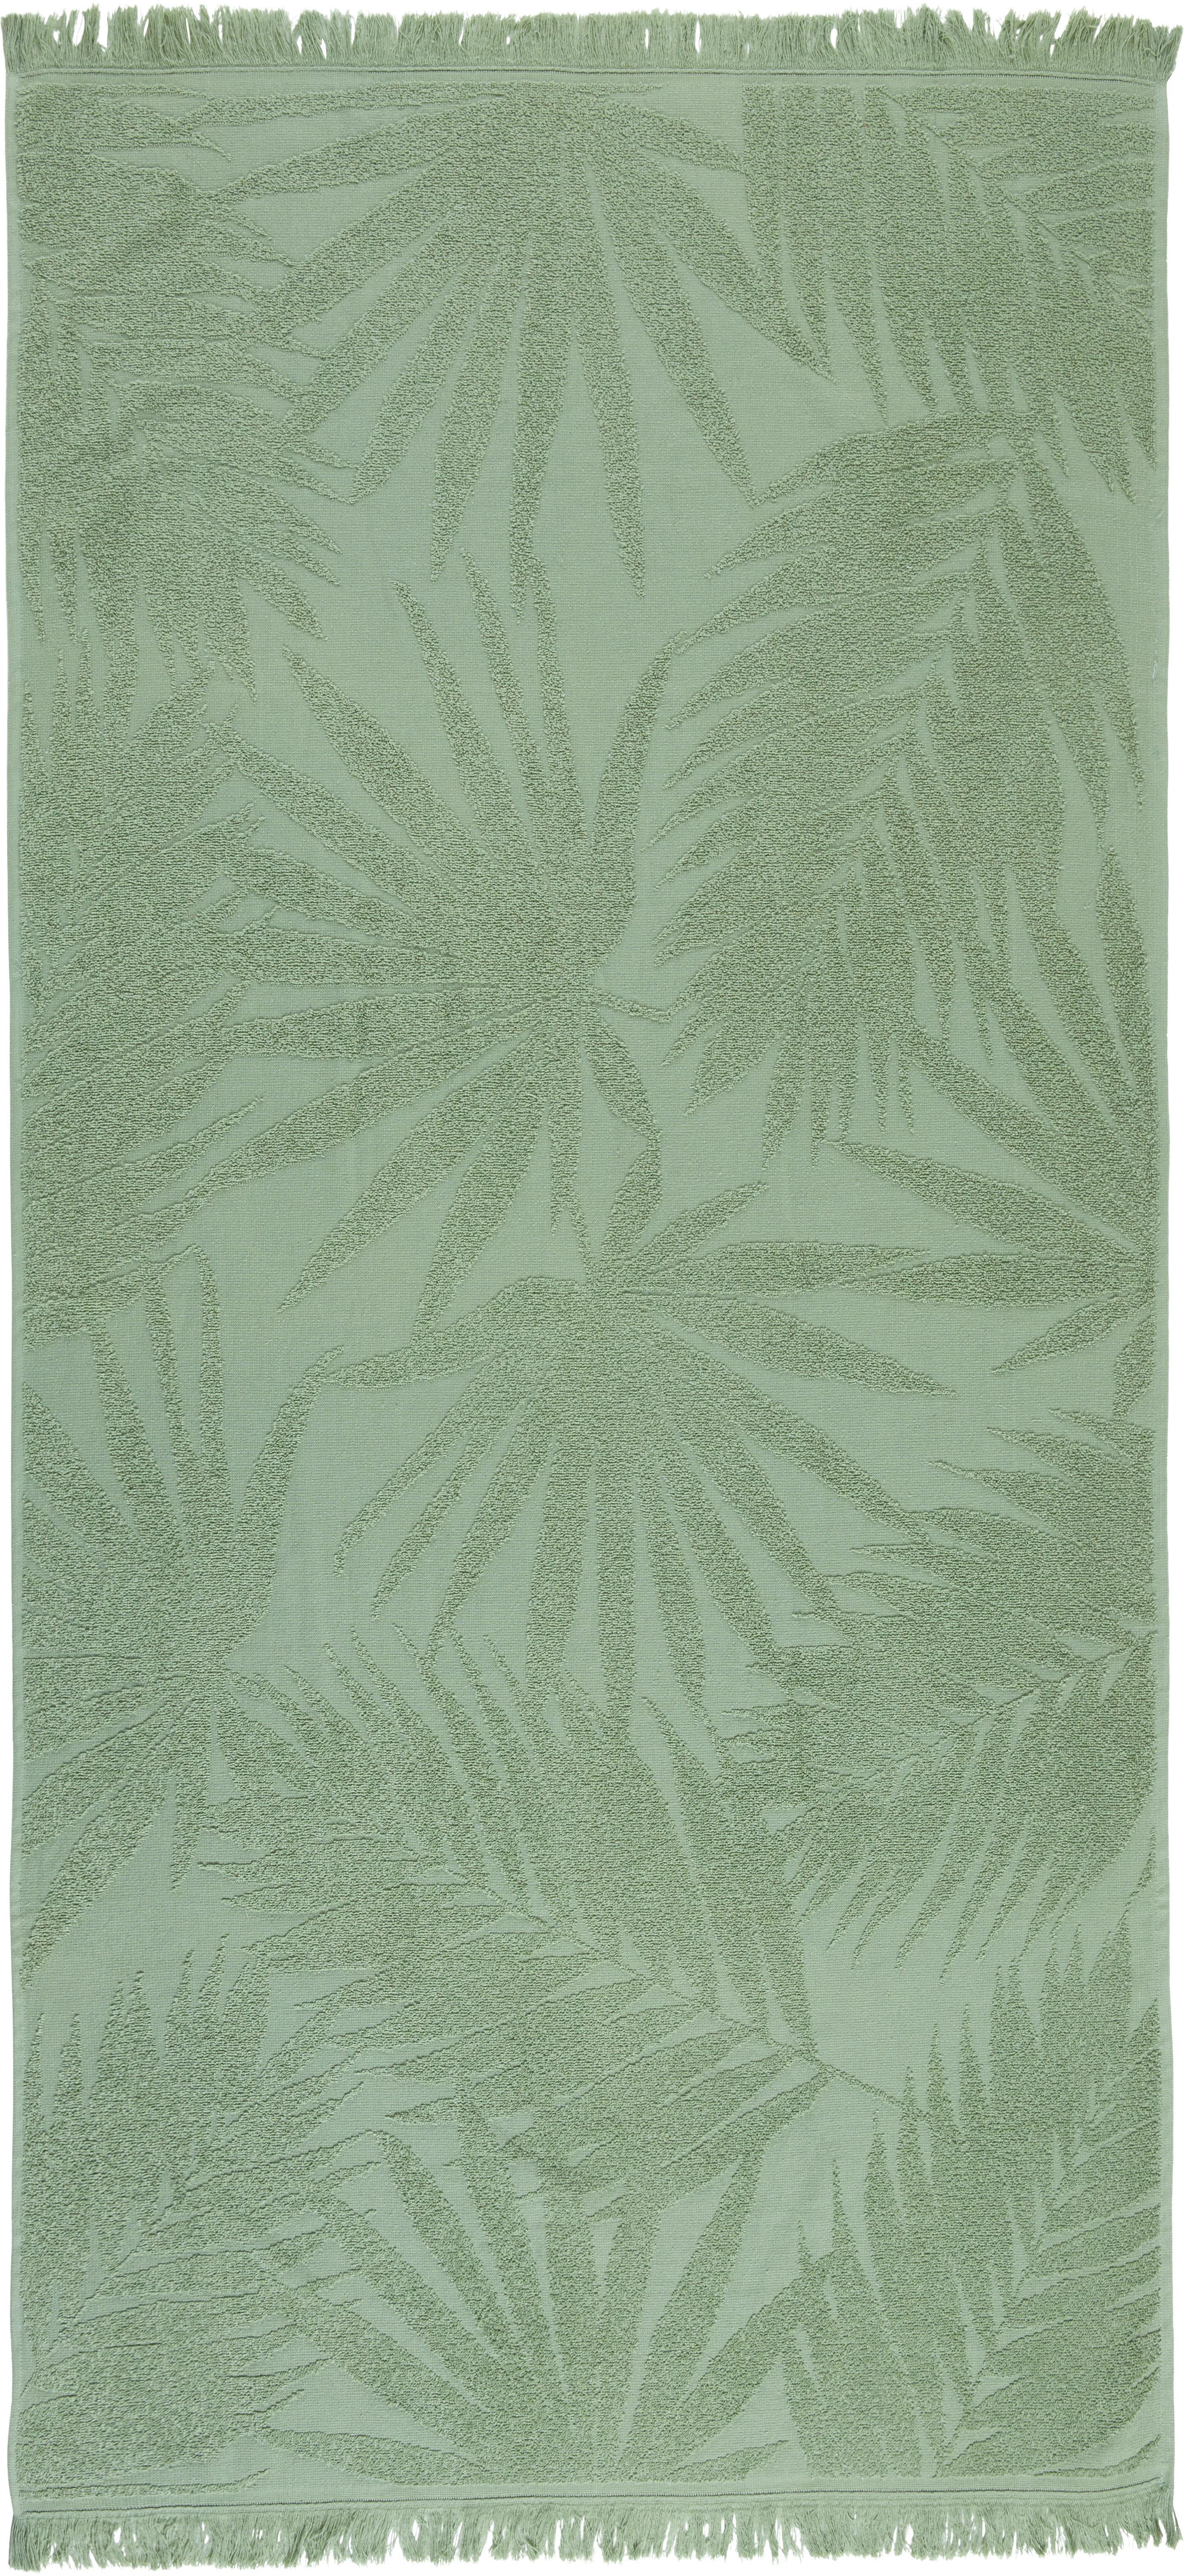 Brisača Za Na Plažo Mara - zelena, Konvencionalno, tekstil (80/160cm) - Modern Living